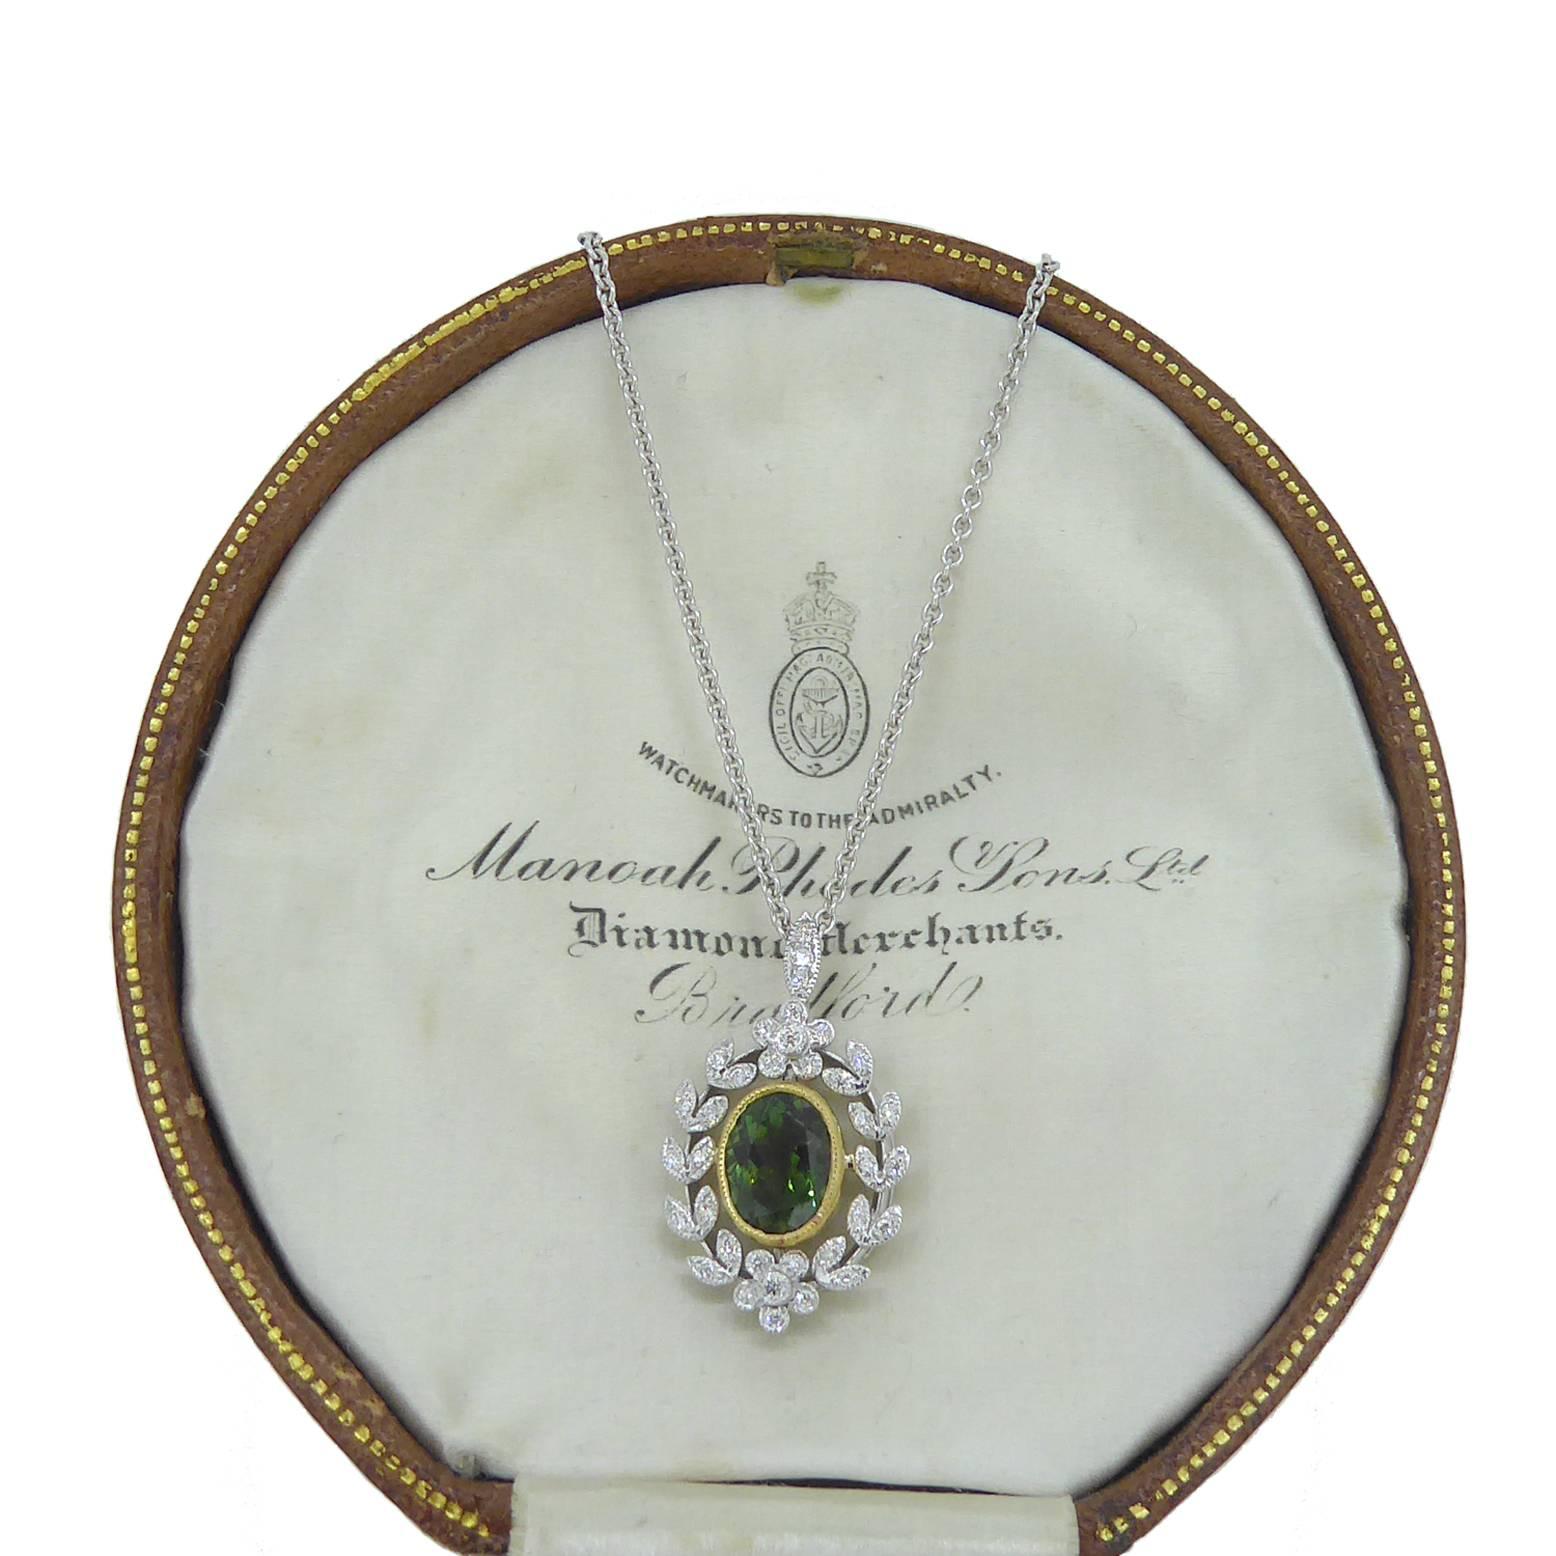 Oval Cut Antique Style 1.82 Carat Green Tourmaline Pendant with 0.21 Carat Diamonds